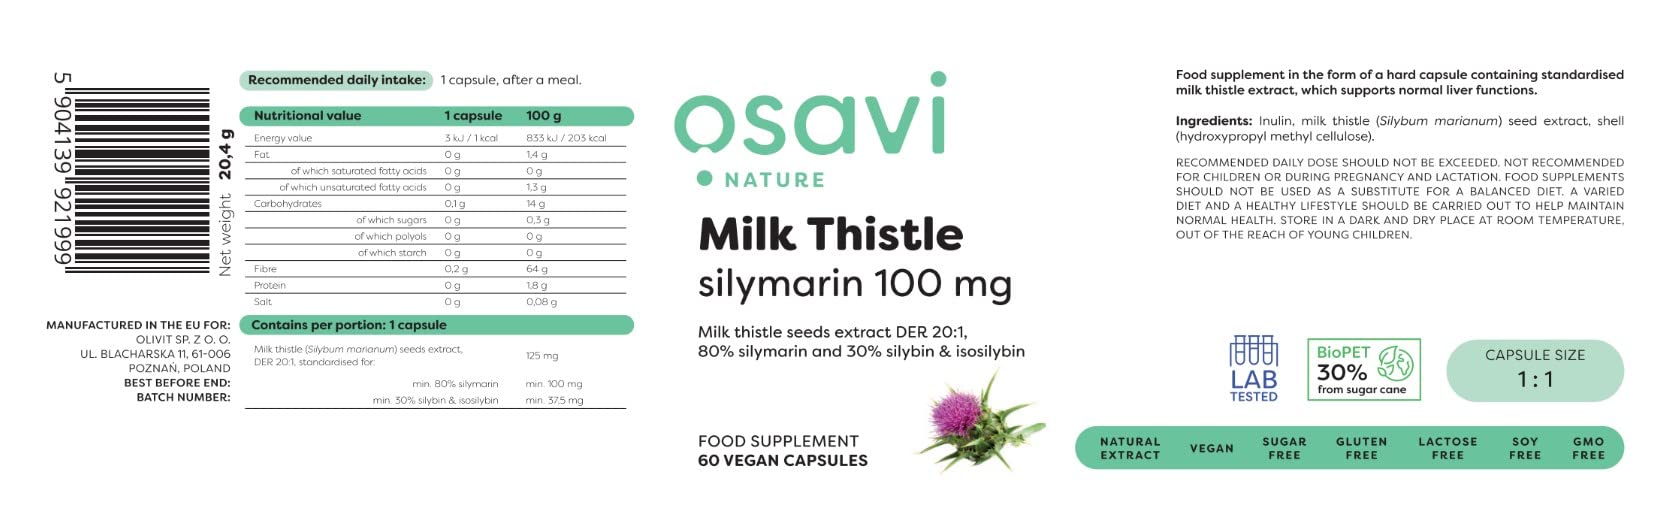 Osavi Milk Thistle, Silymarin 100mg - 60 vegan caps | High-Quality Combination Multivitamins & Minerals | MySupplementShop.co.uk